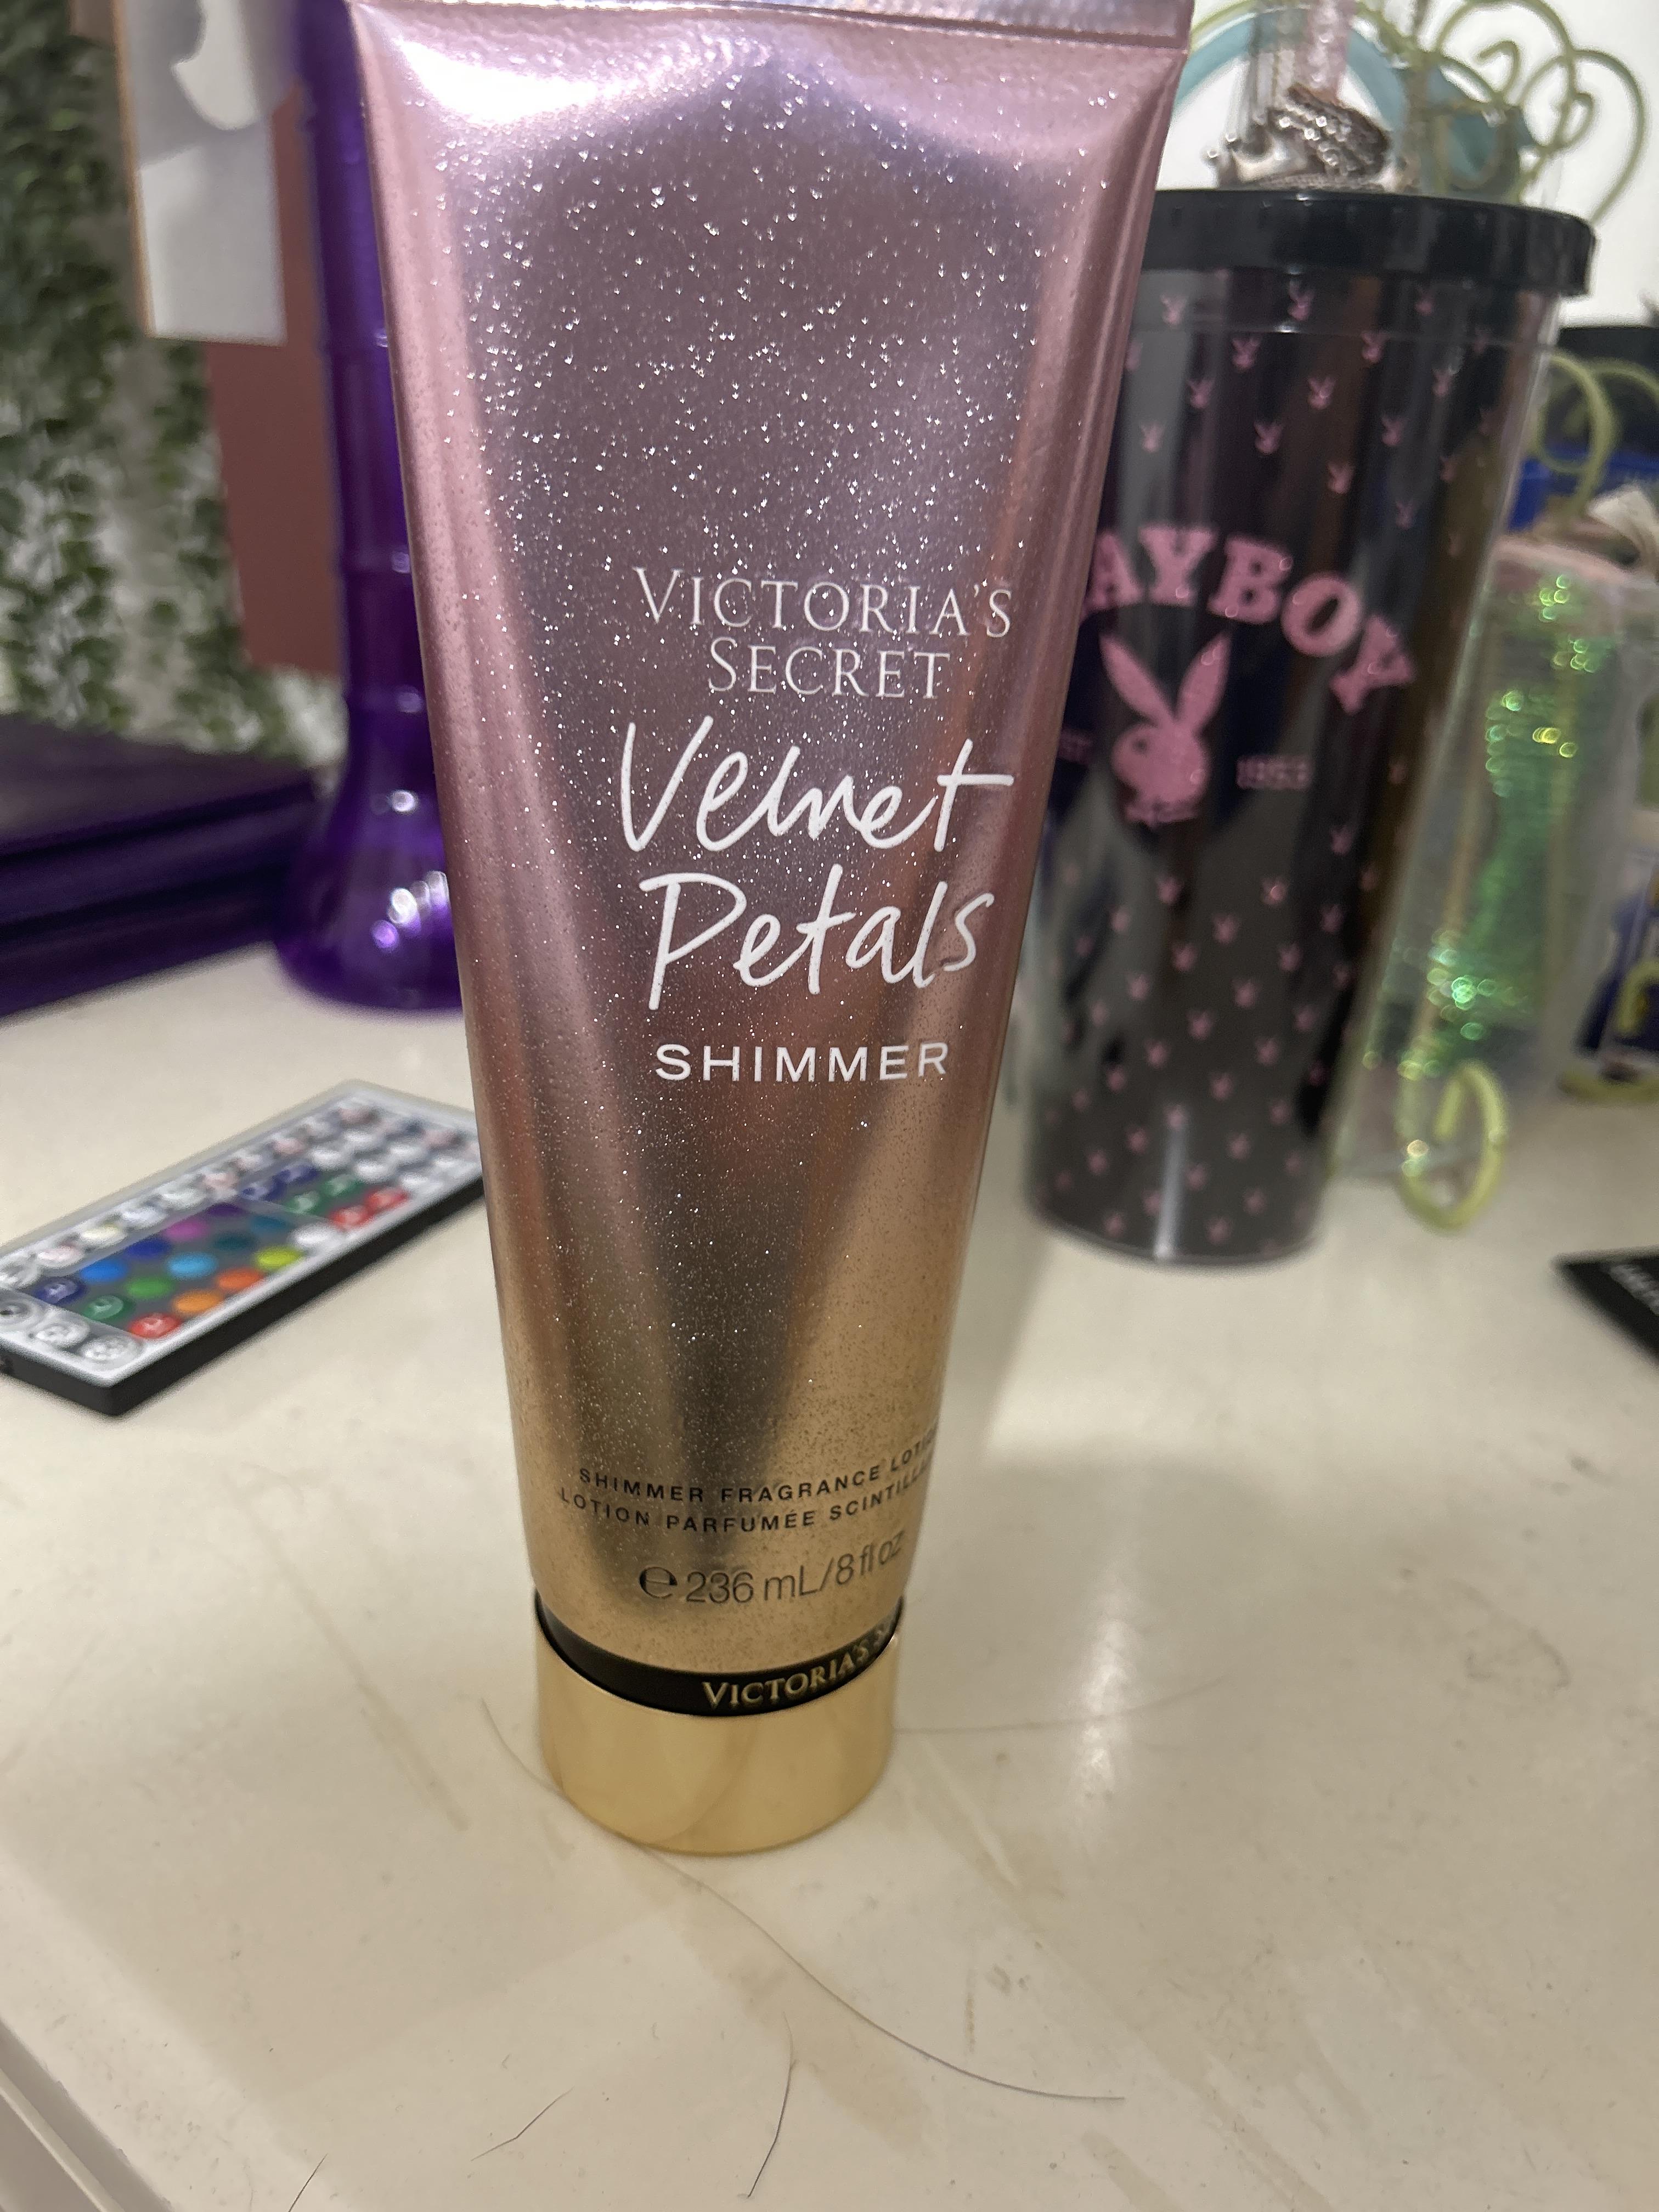 Victoria's Secret Velvet Petals SHIMMER (com glitter